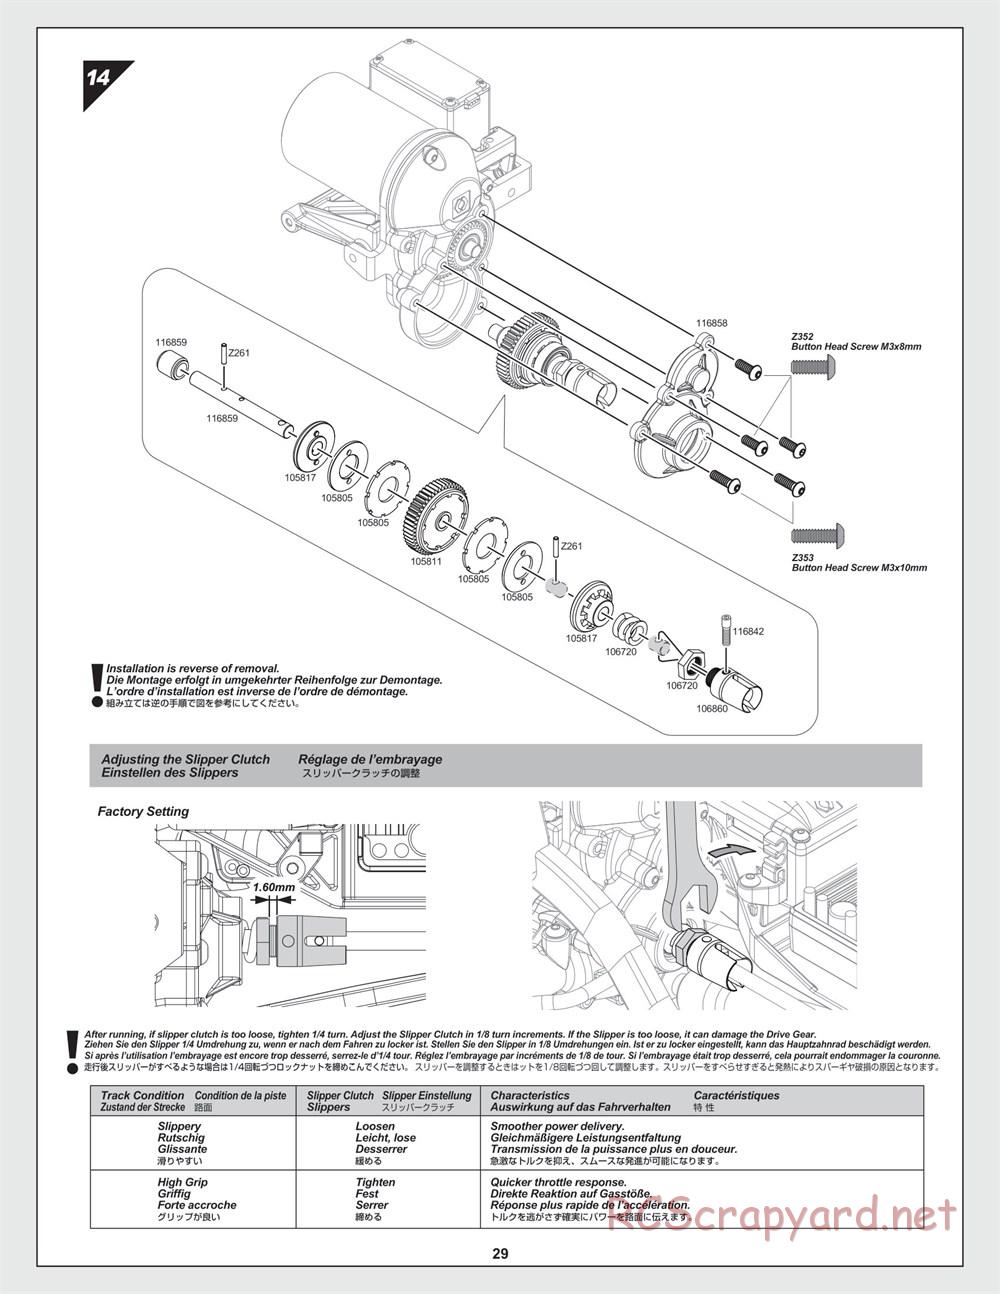 HPI - Venture Crawler - Manual - Page 29